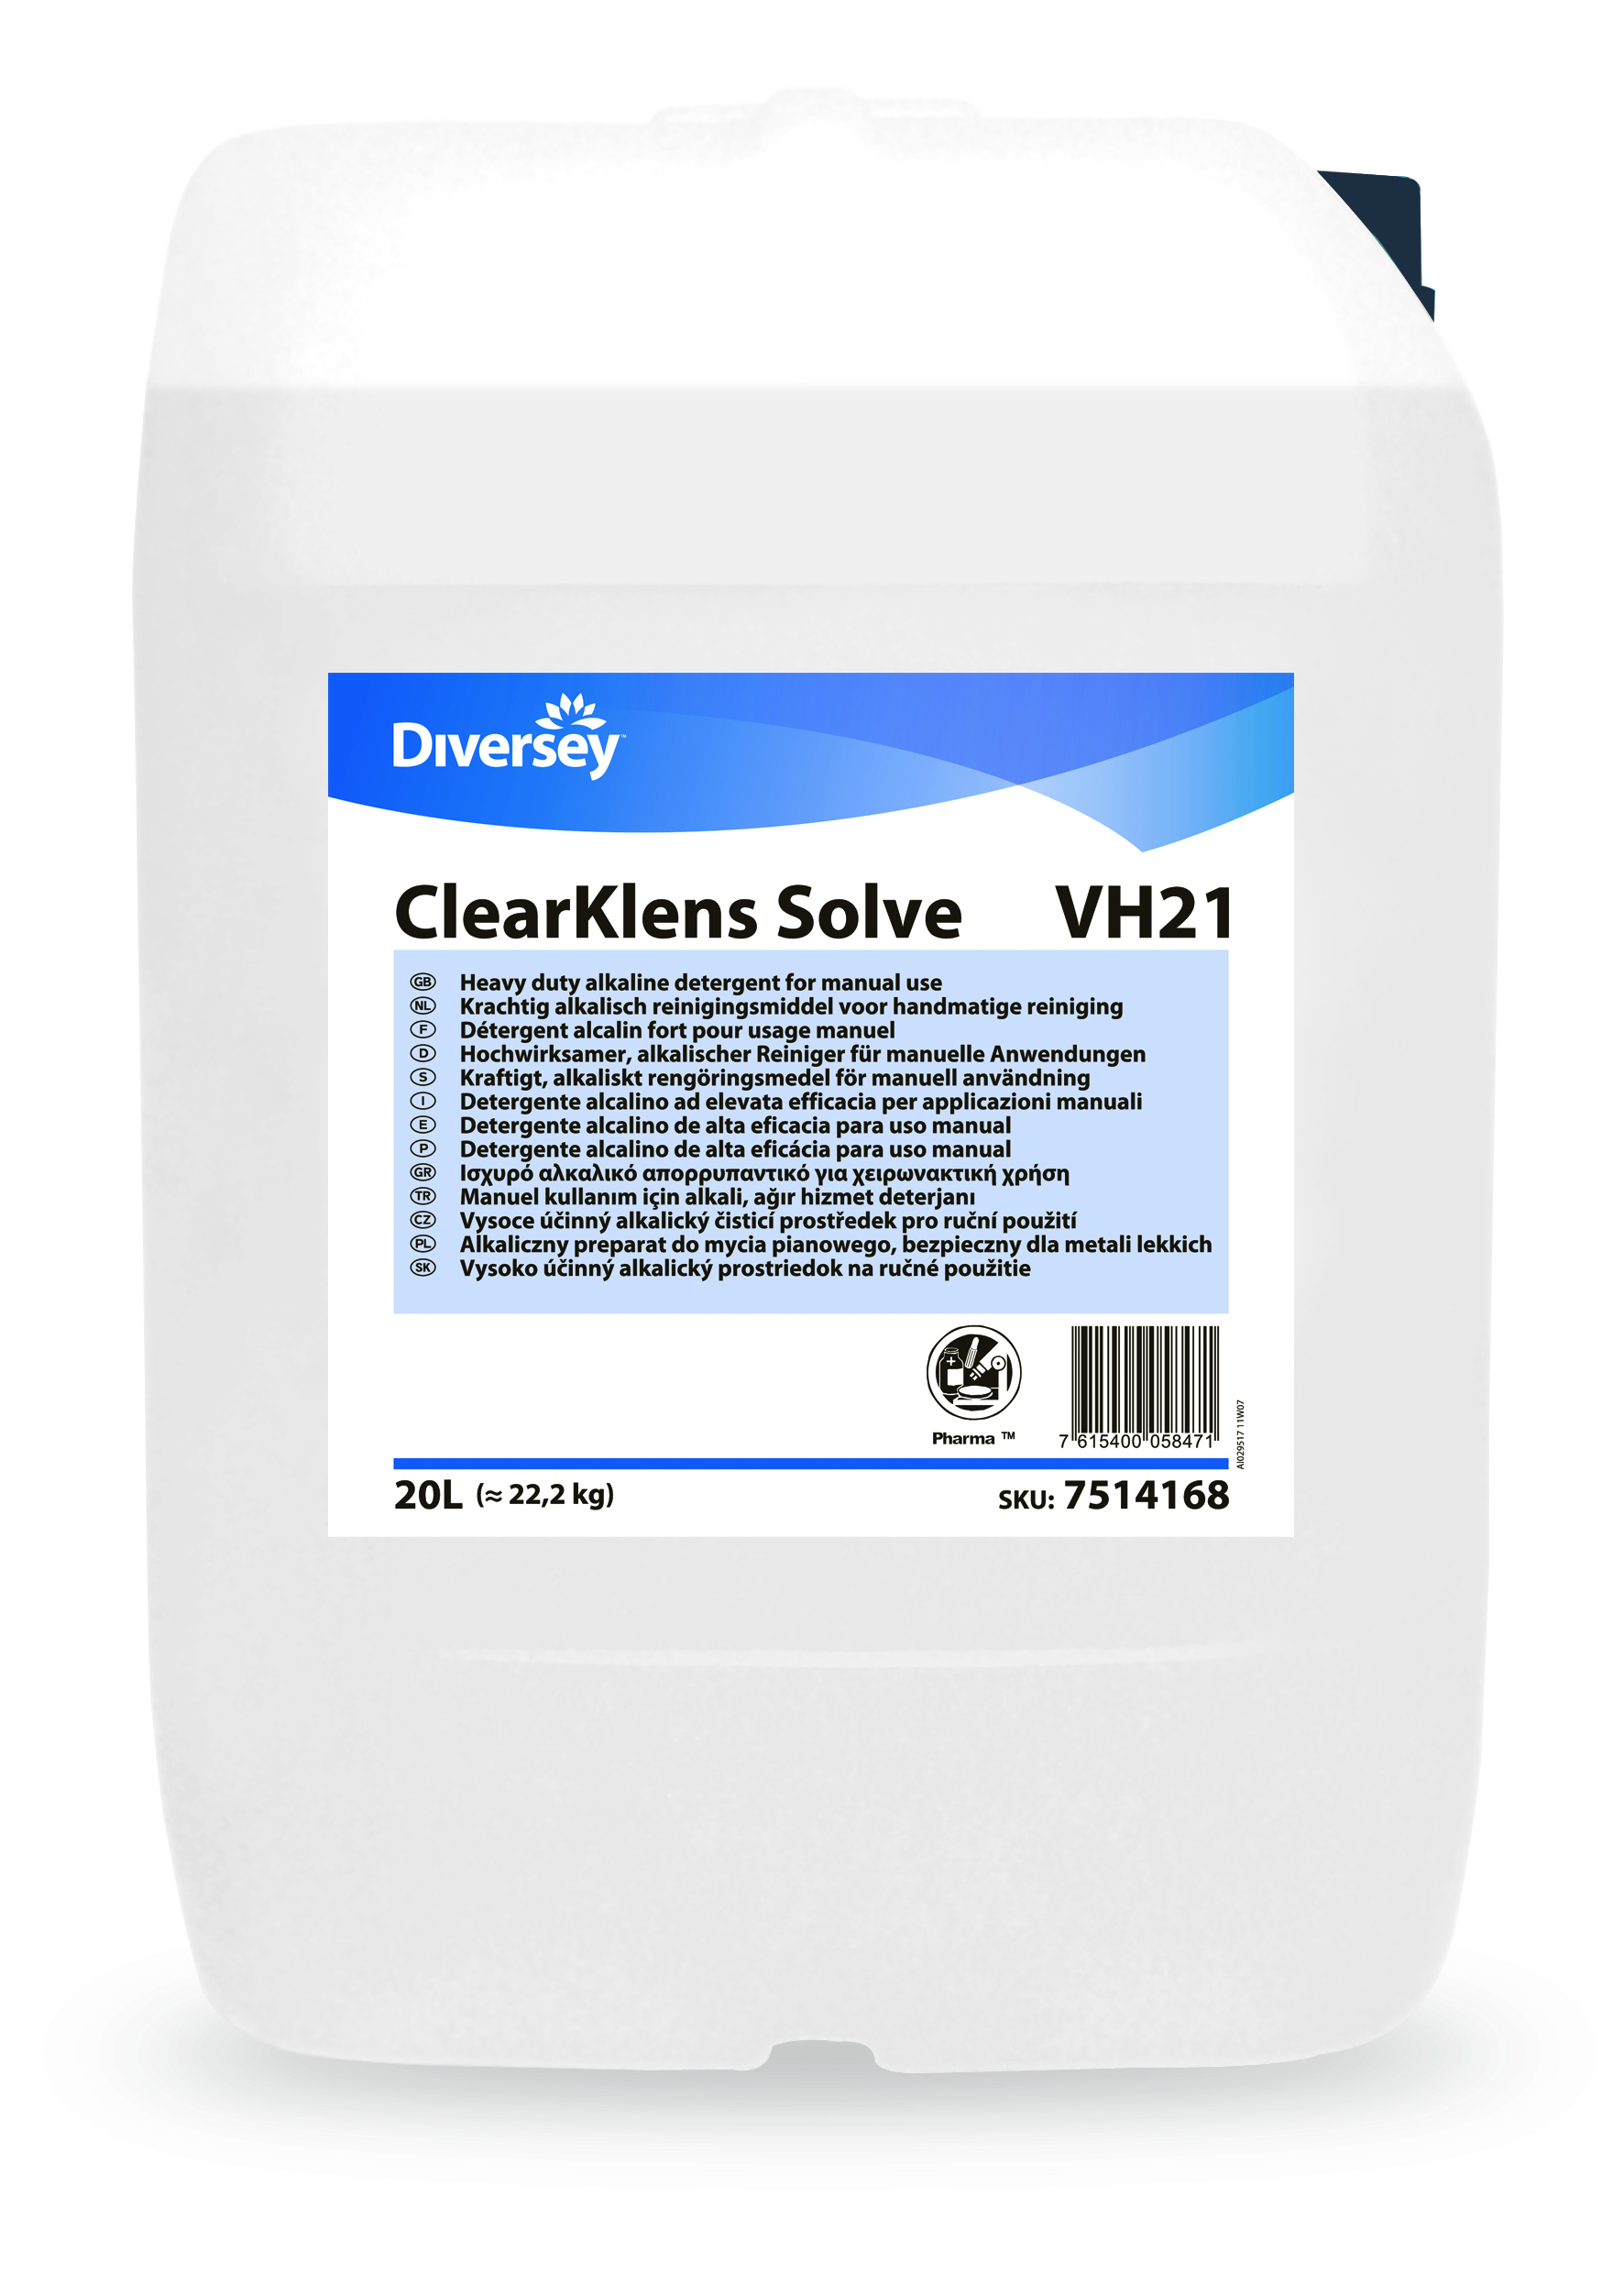 ClearKlens Solve VH21